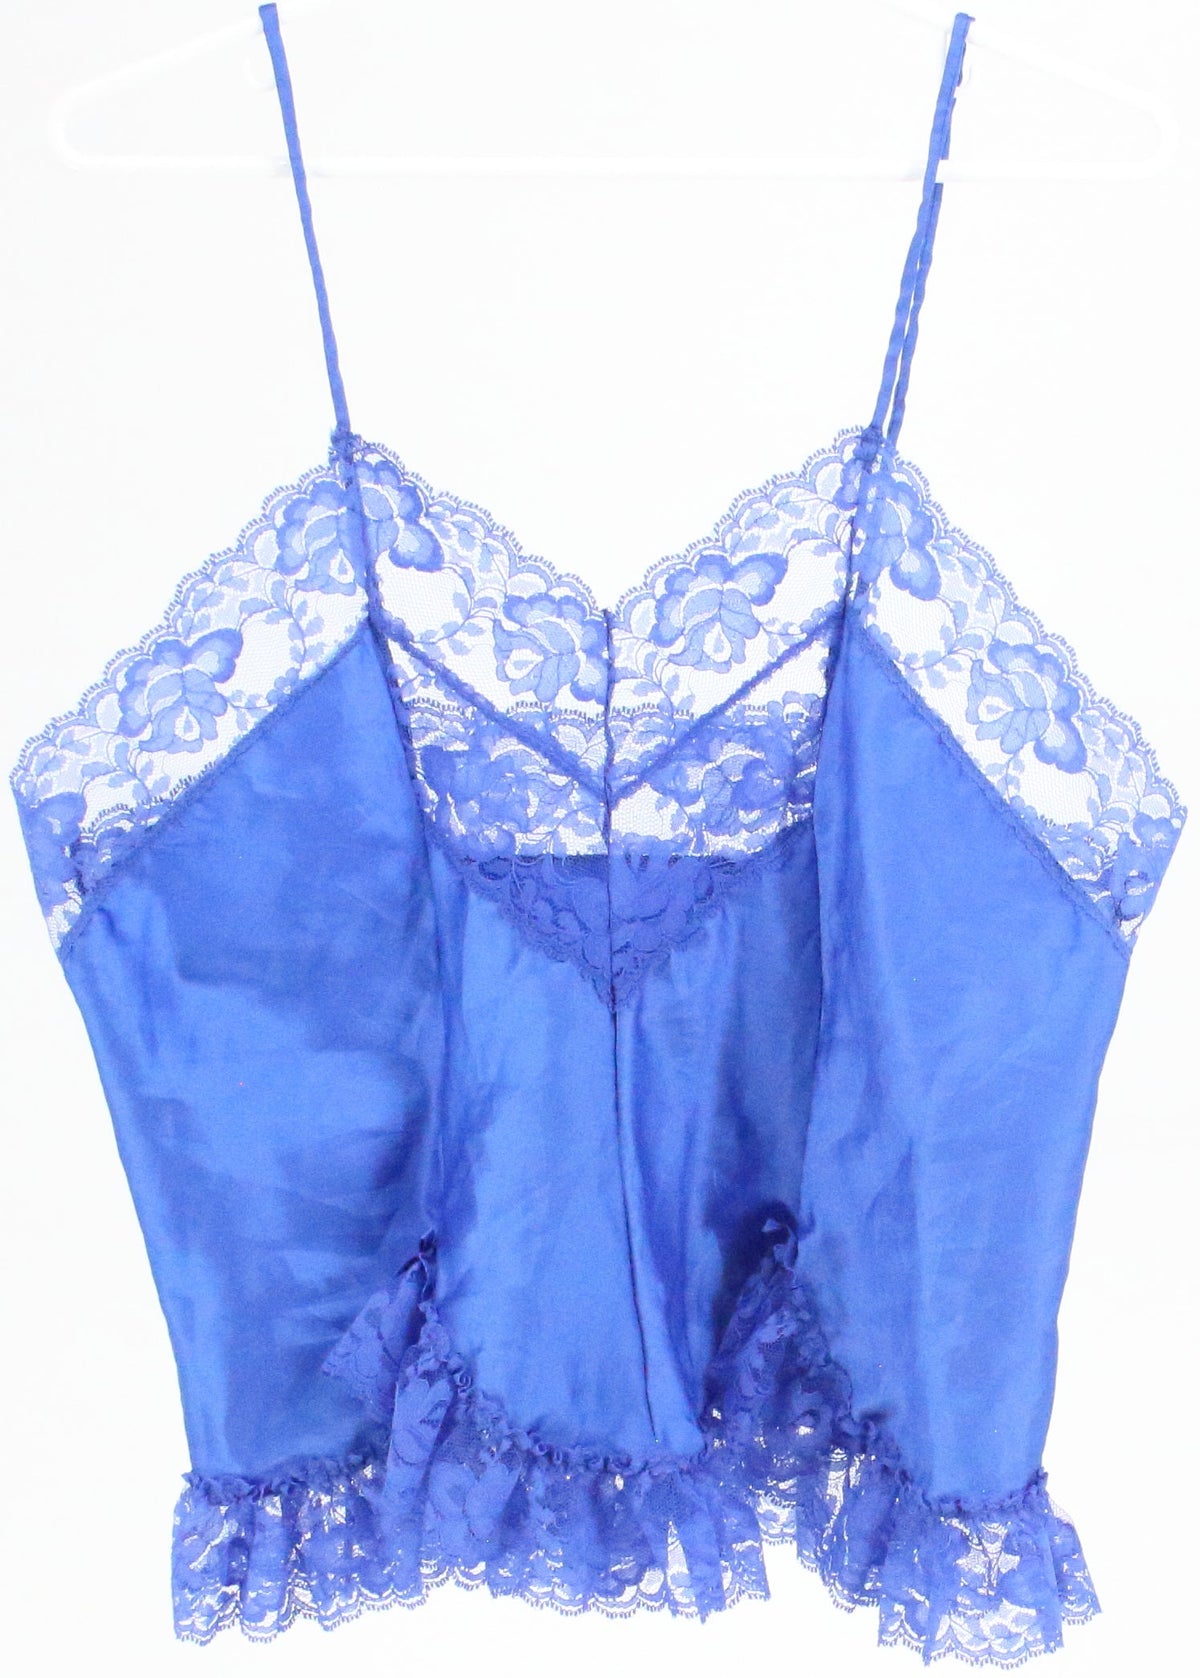 Alana Gale Royal Blue Camisole